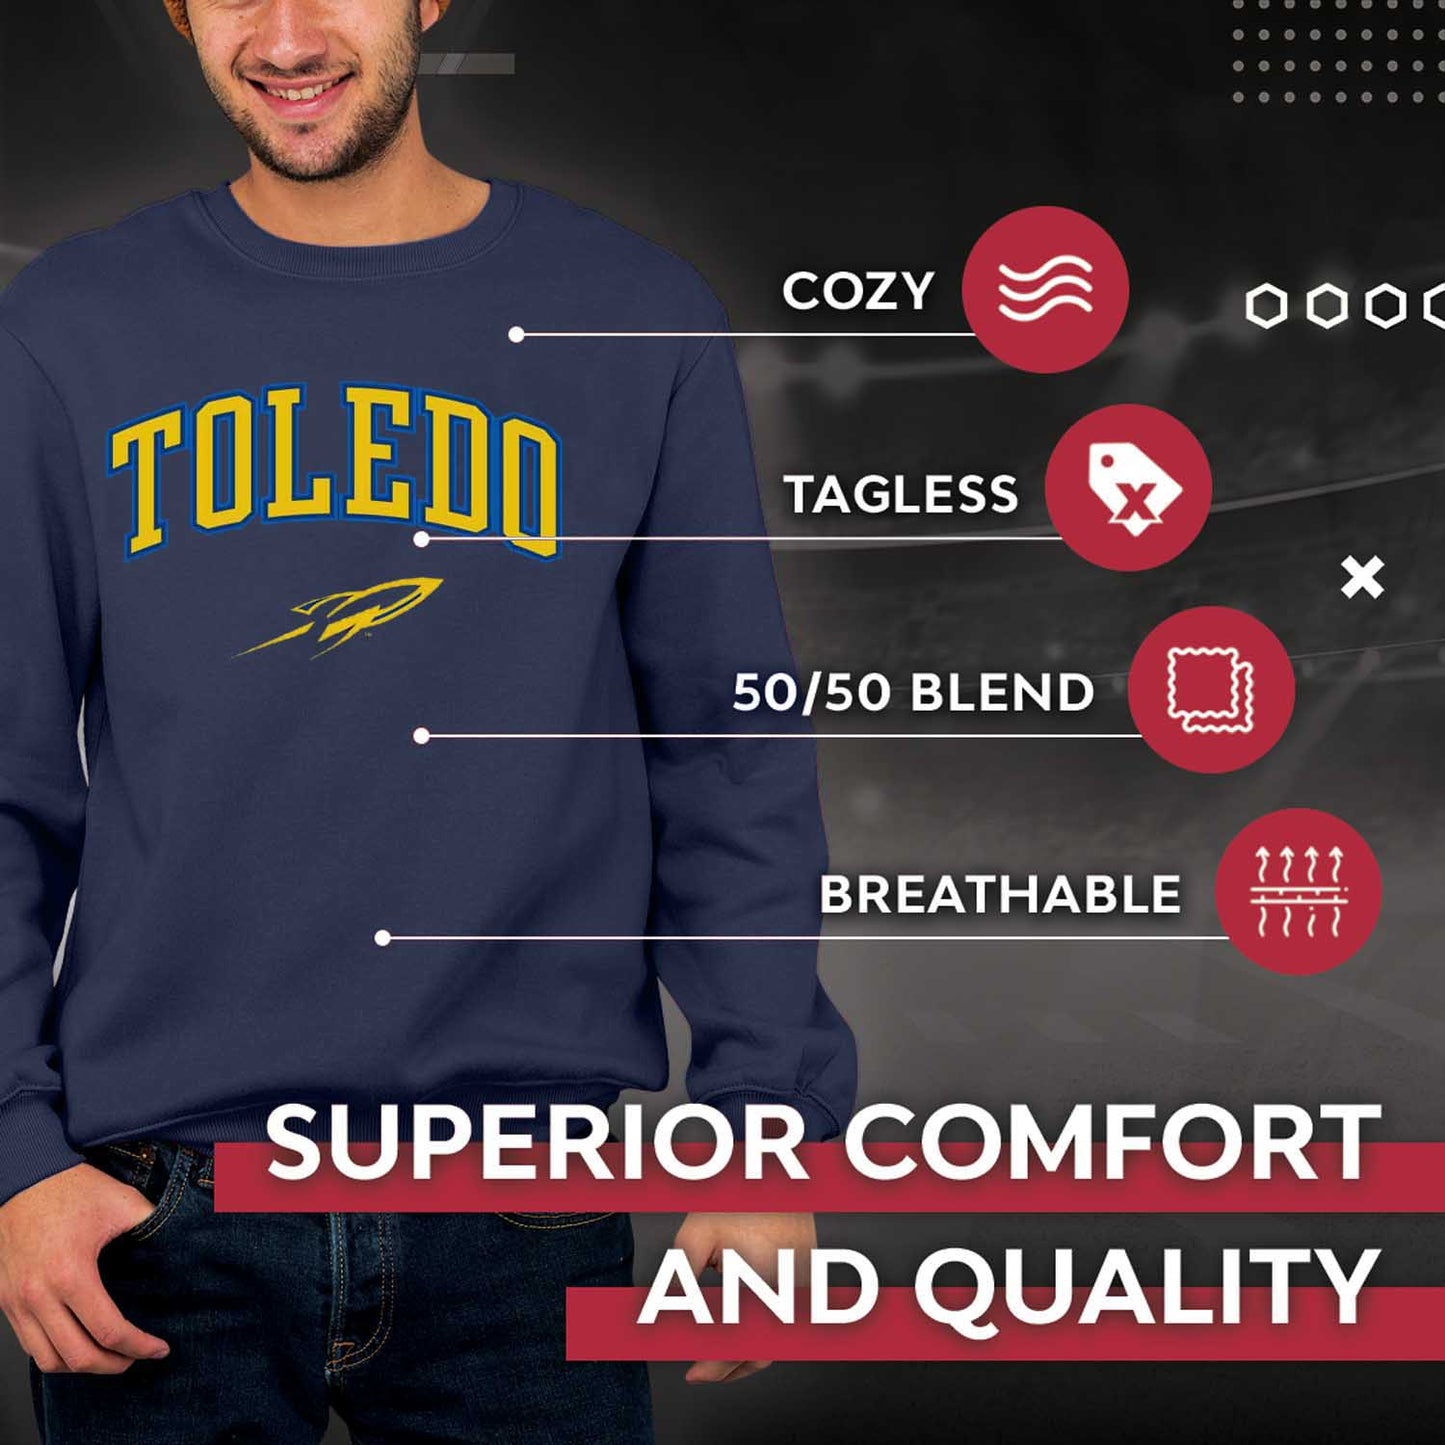 Toledo Rockets Adult Arch & Logo Soft Style Gameday Crewneck Sweatshirt - Navy